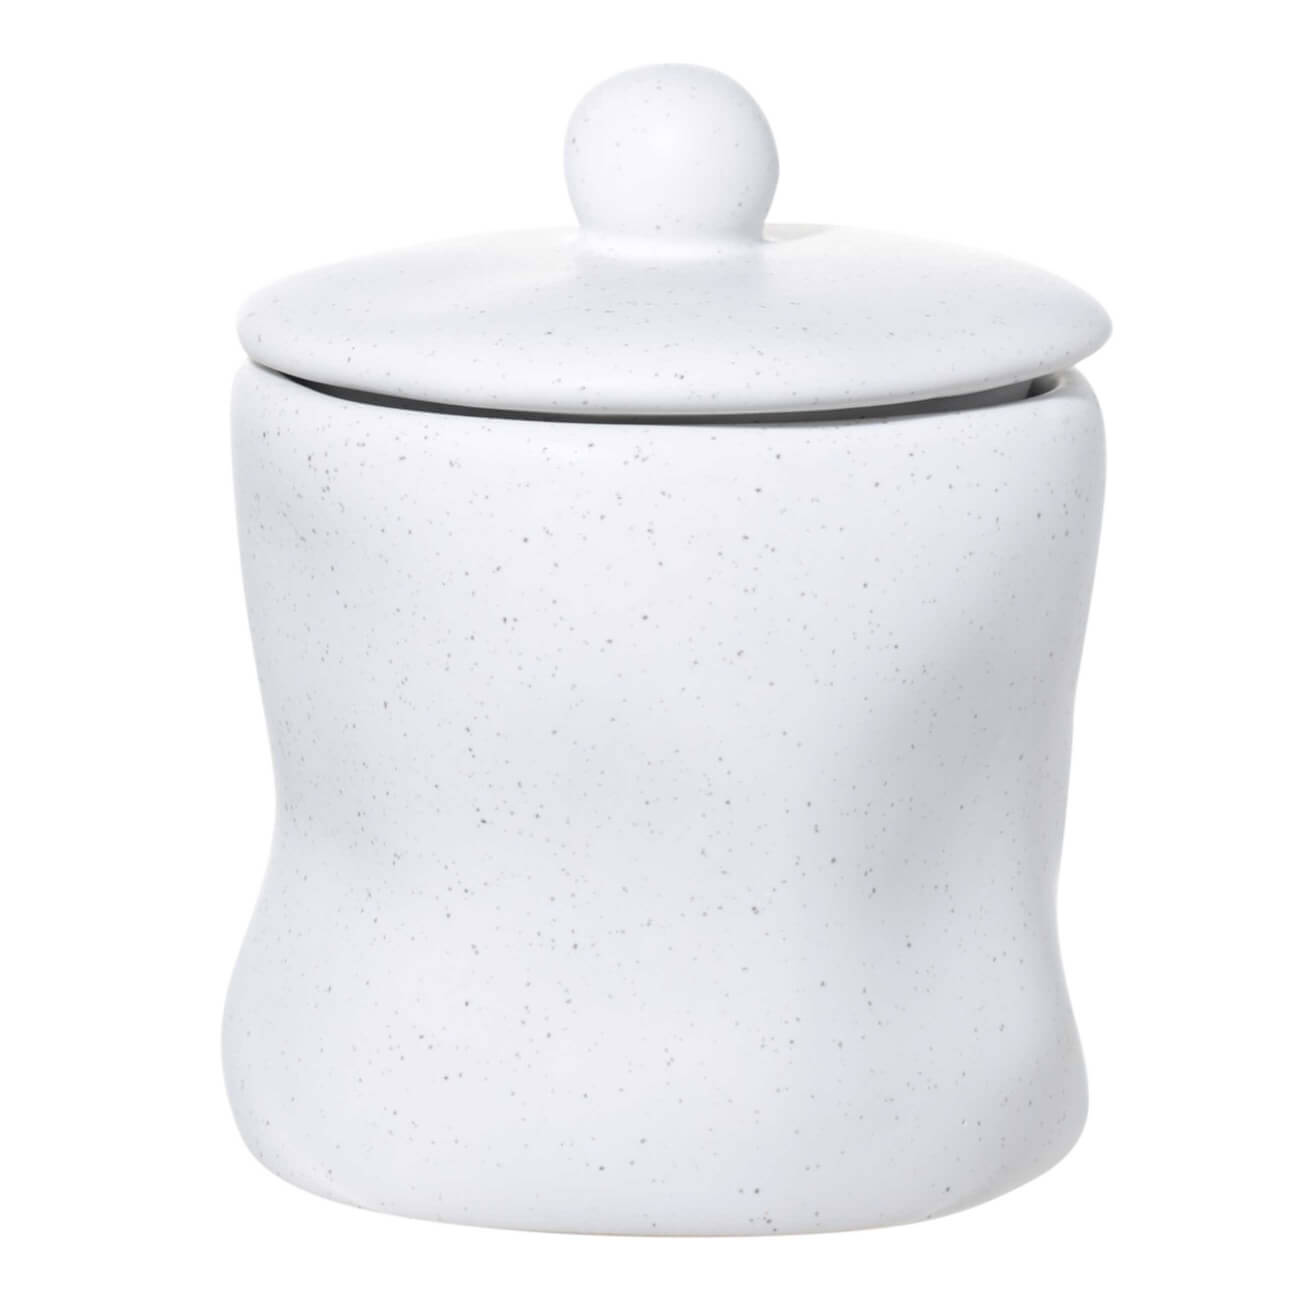 Шкатулка для ванной, 9х11 см, керамика, белая, в крапинку, Delicia шкатулка пенал маленький 4x11x12